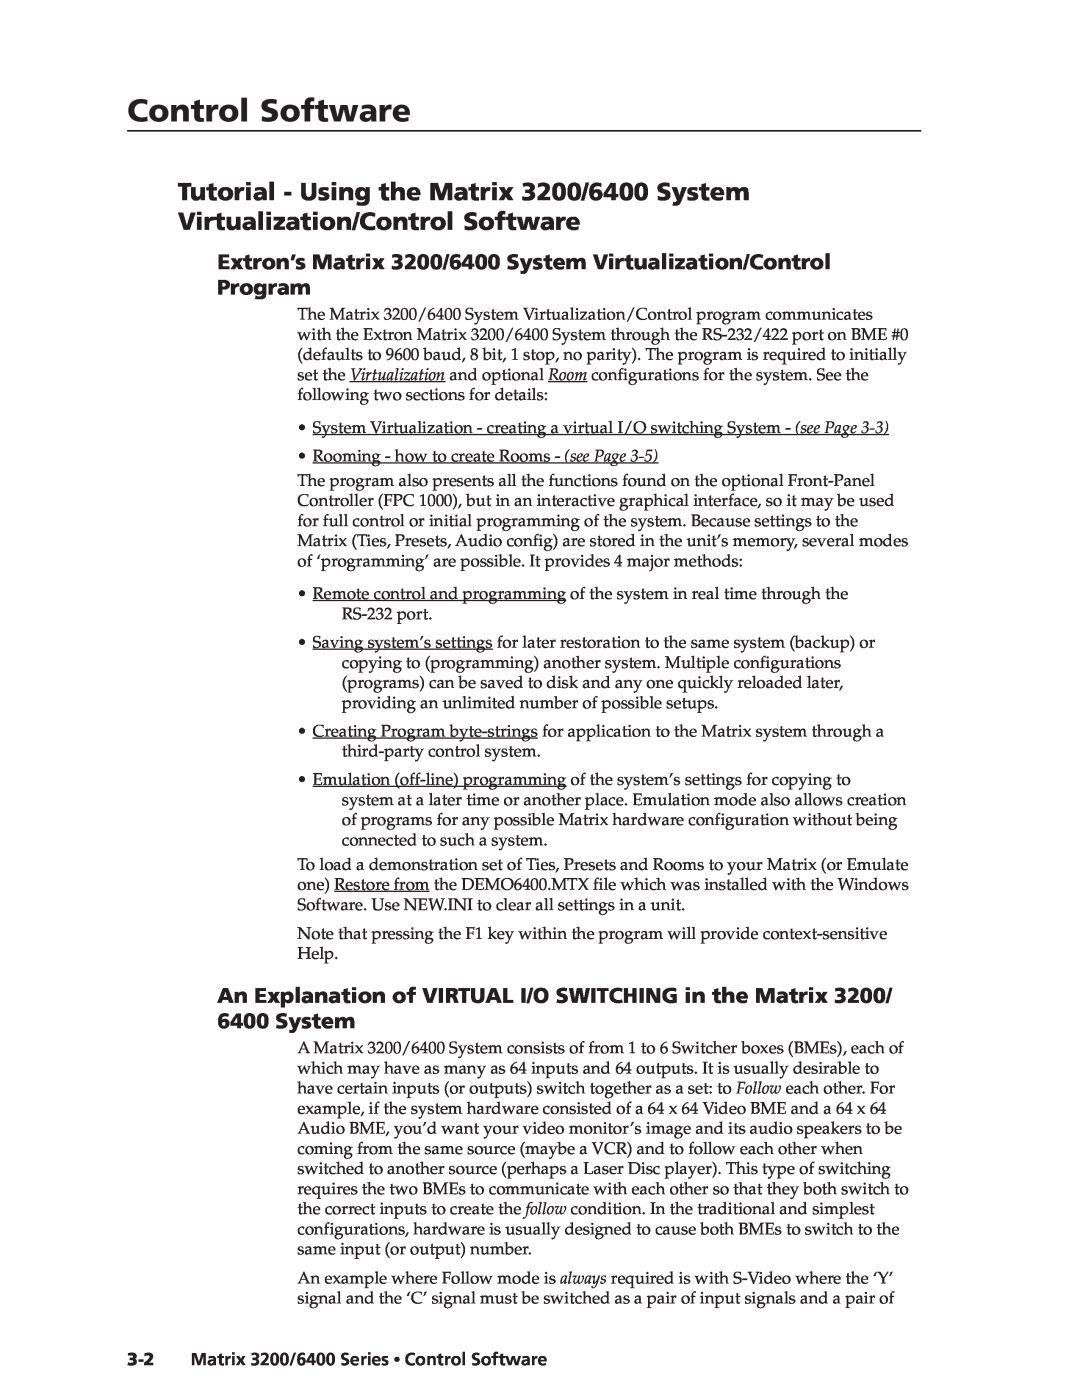 Extron electronic 3200s manual ControlSoftware,cont’d, Extron’s Matrix 3200/6400 System Virtualization/Control Program 